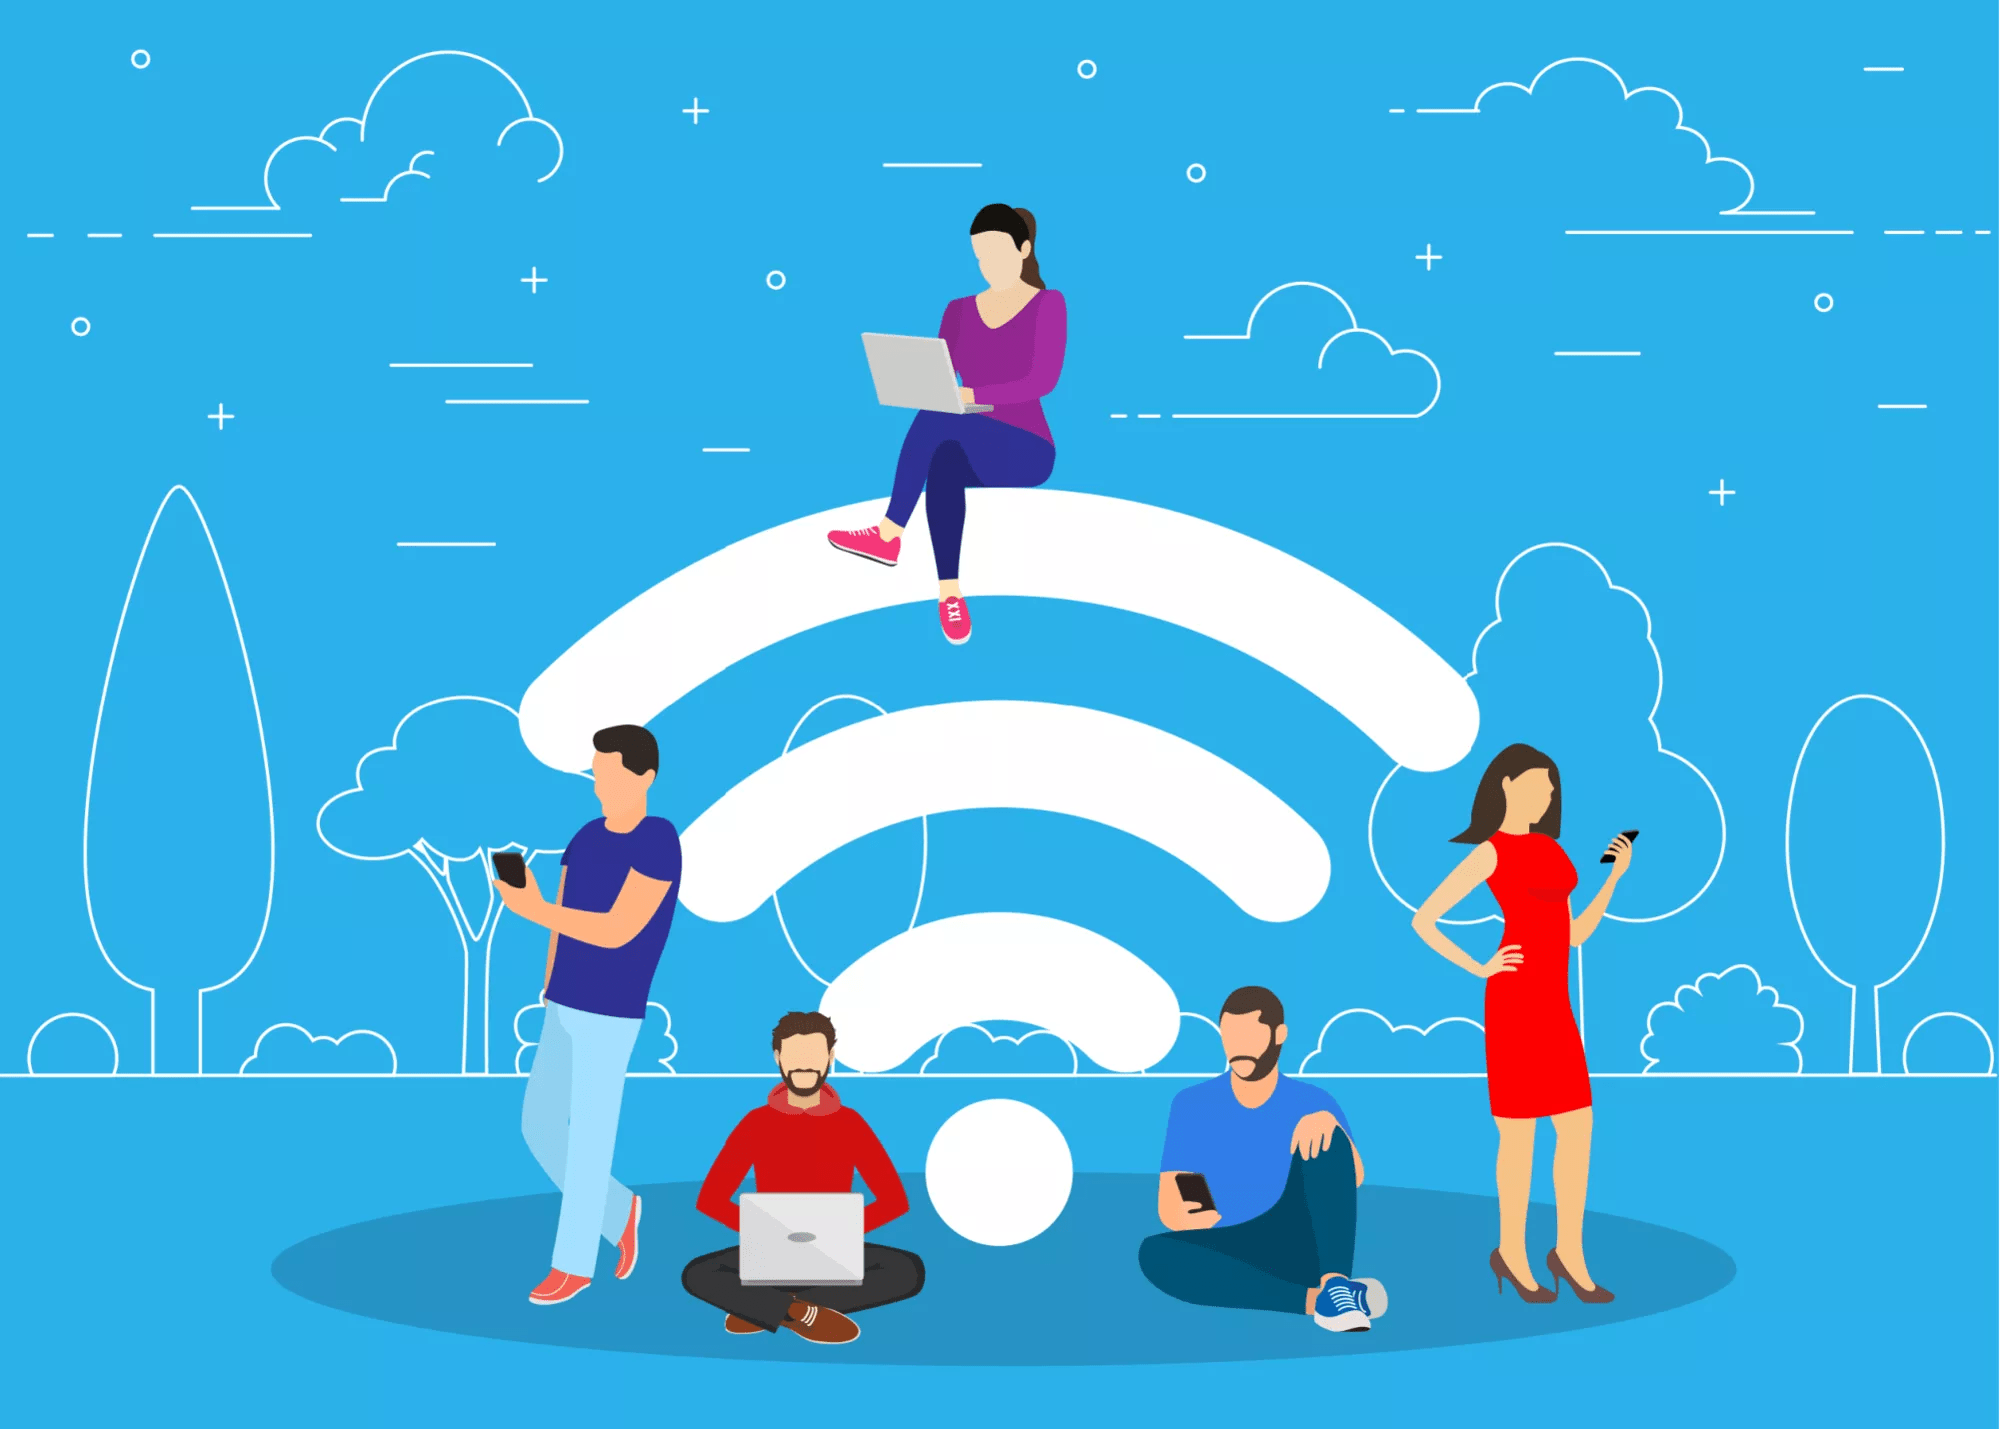 Wi-Fi symbol with people sitting around it (illustration)